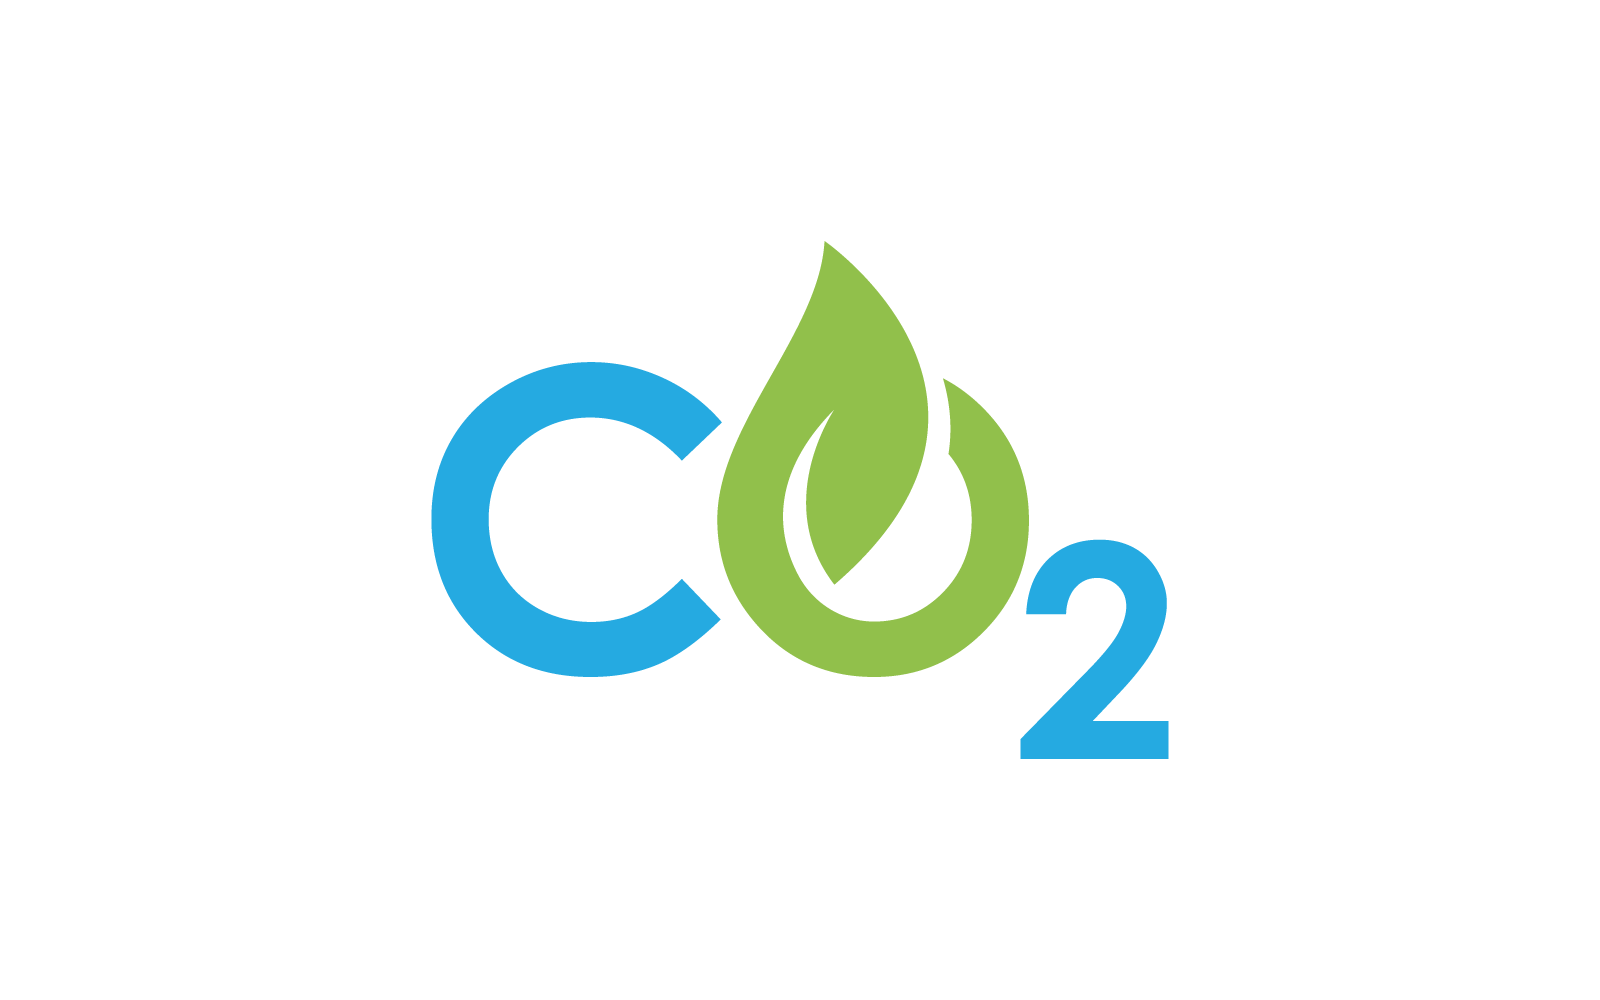 Co2 Carbon dioxide logo illustration template